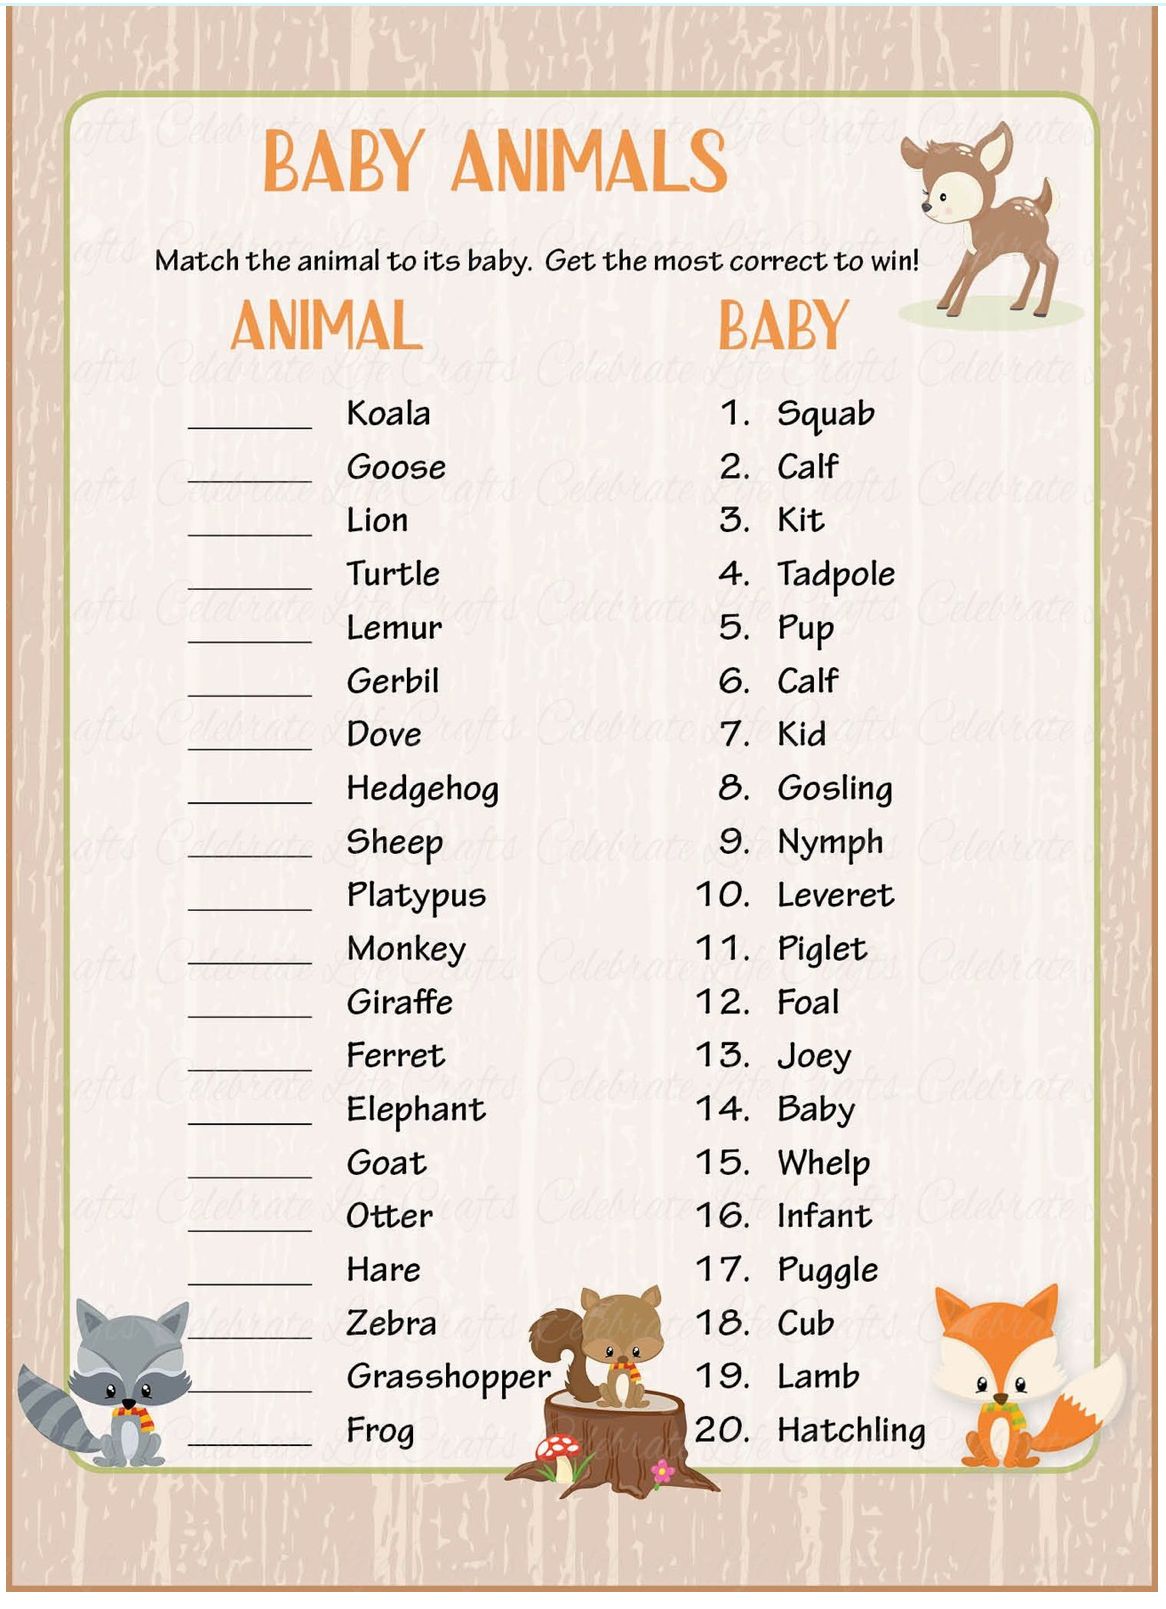 Baby Animal Names | Other Quiz - Quizizz